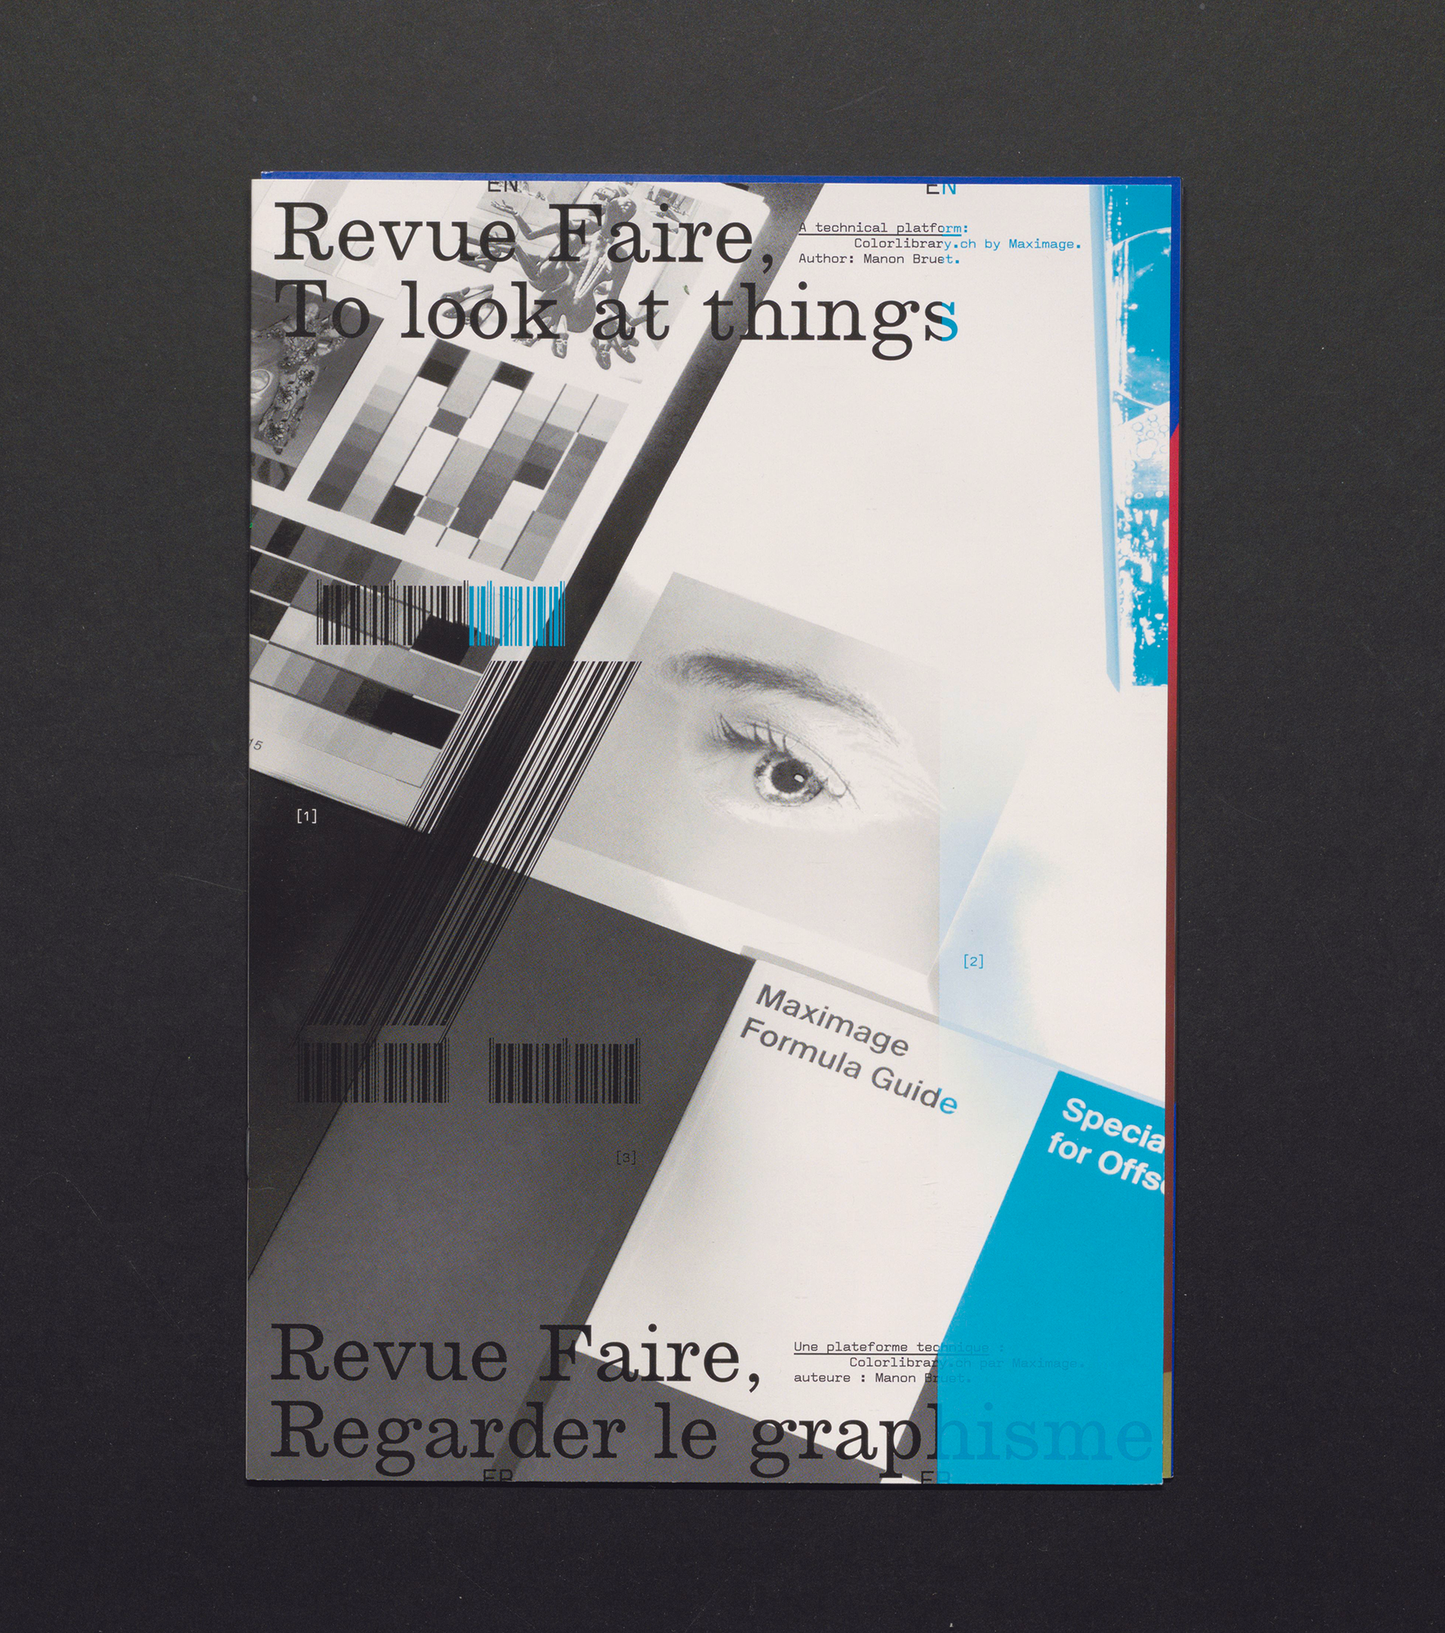 Revue Faire No. 02  - A technical platform: Colorlibrary.ch by Maximage.